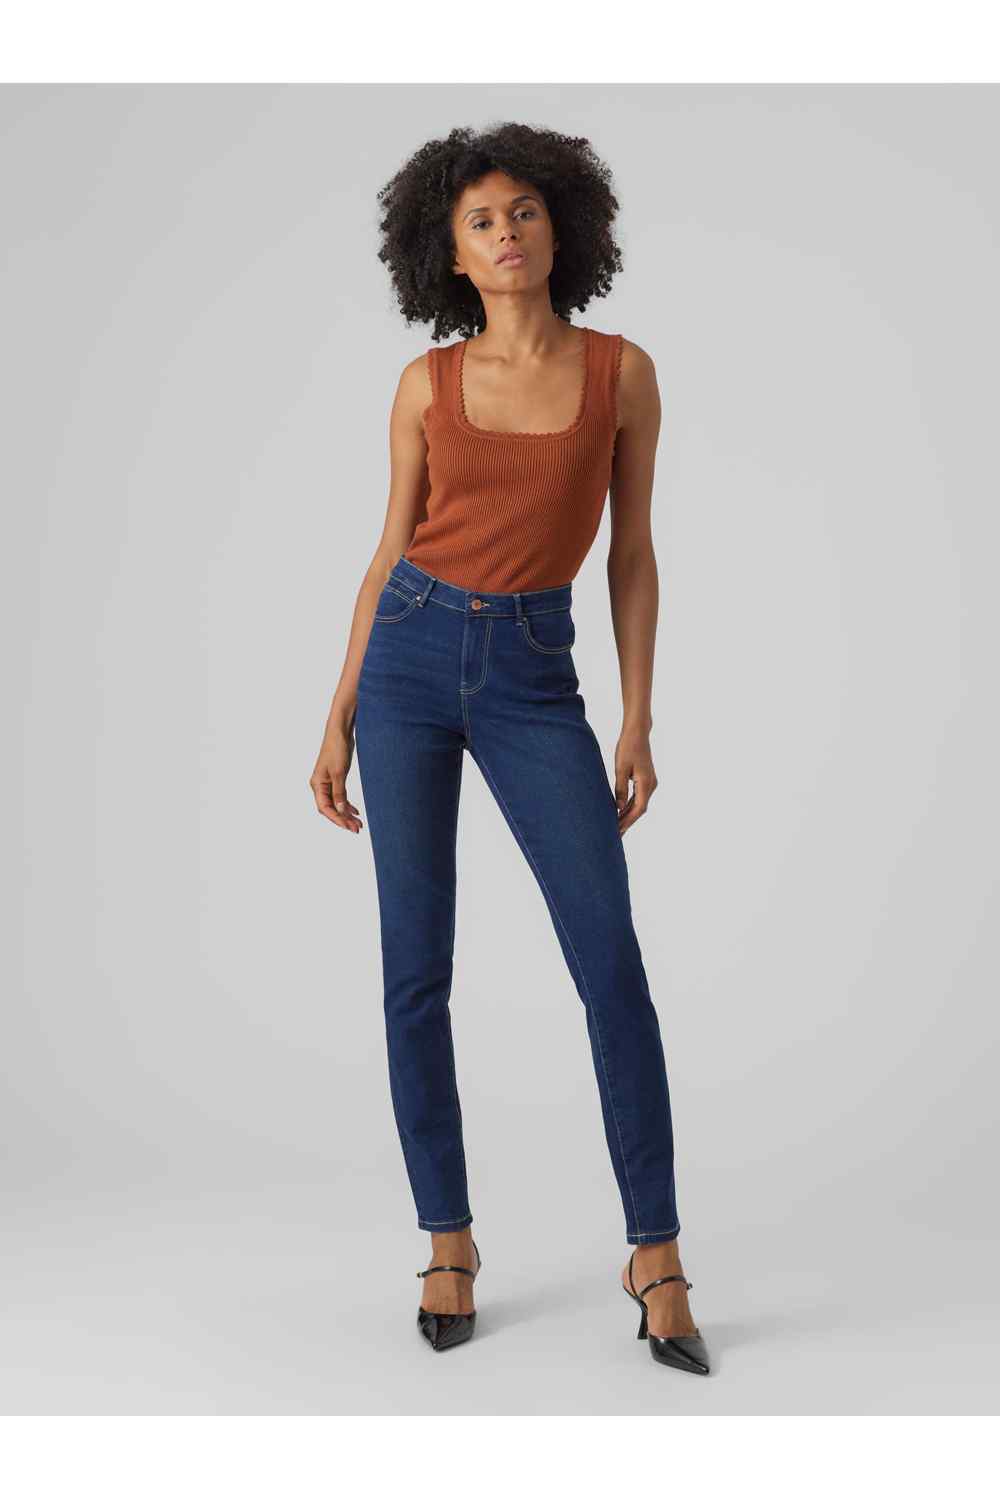 Vero Moda June Skinny Jean - Blue 3 Shaws Department Stores